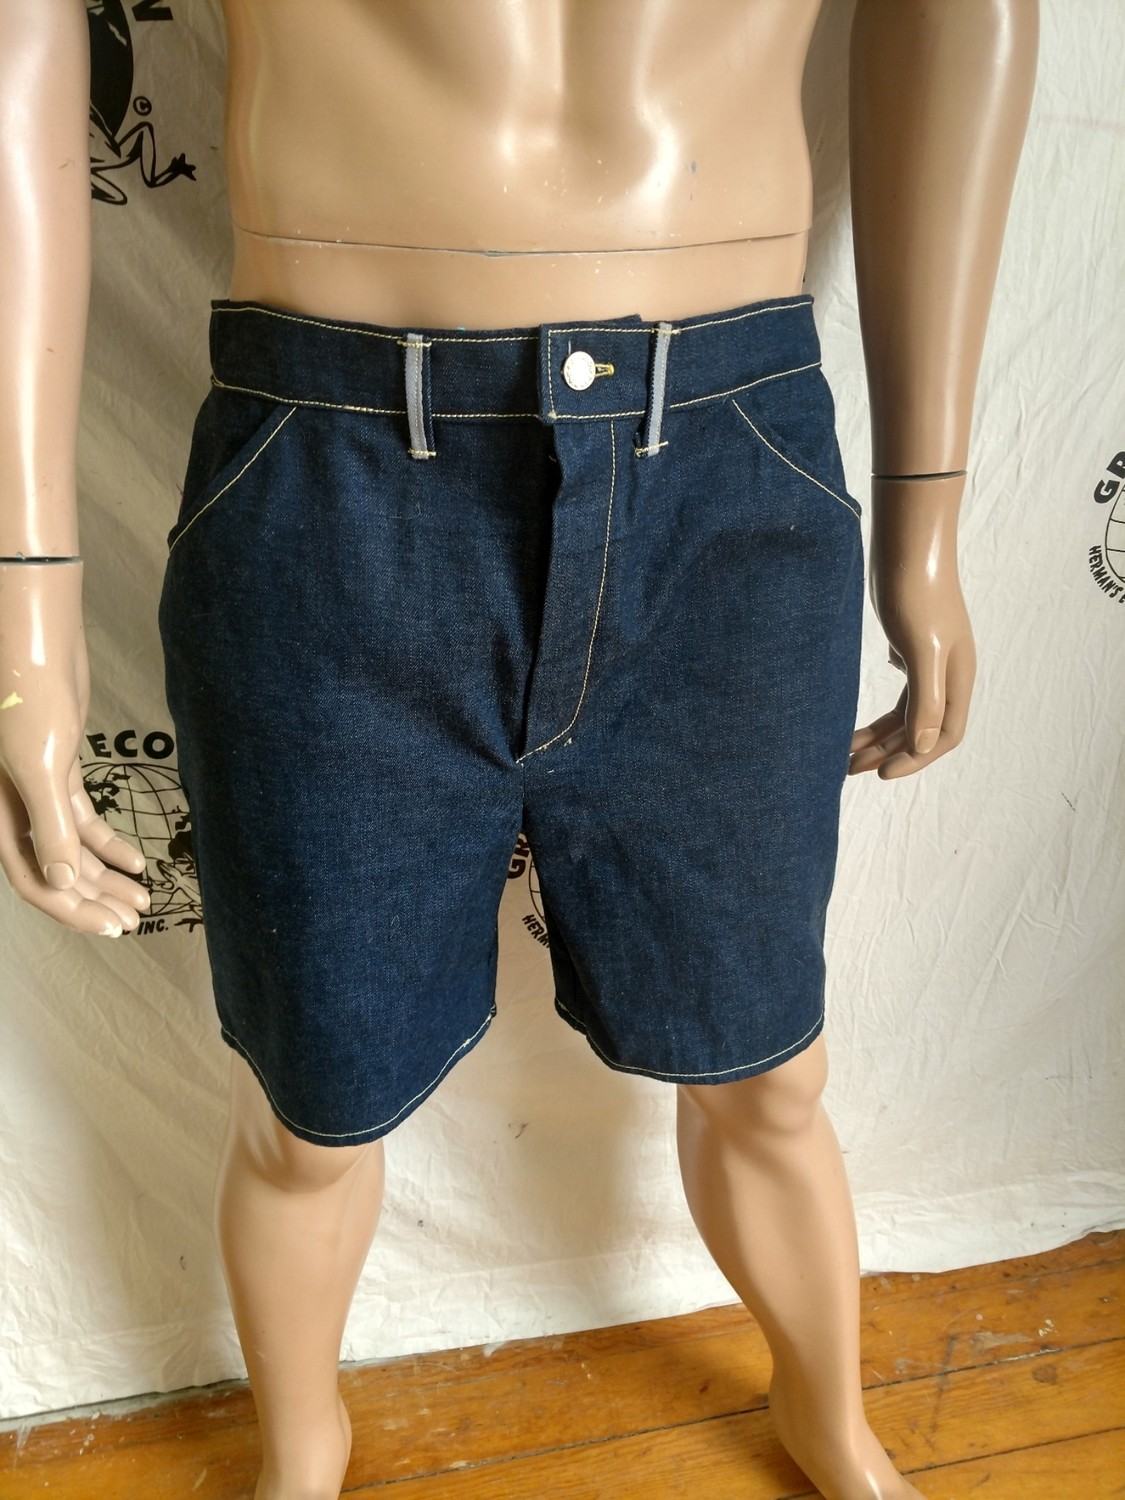 Hermans Eco Vintage Denim Shorts made in USA 34